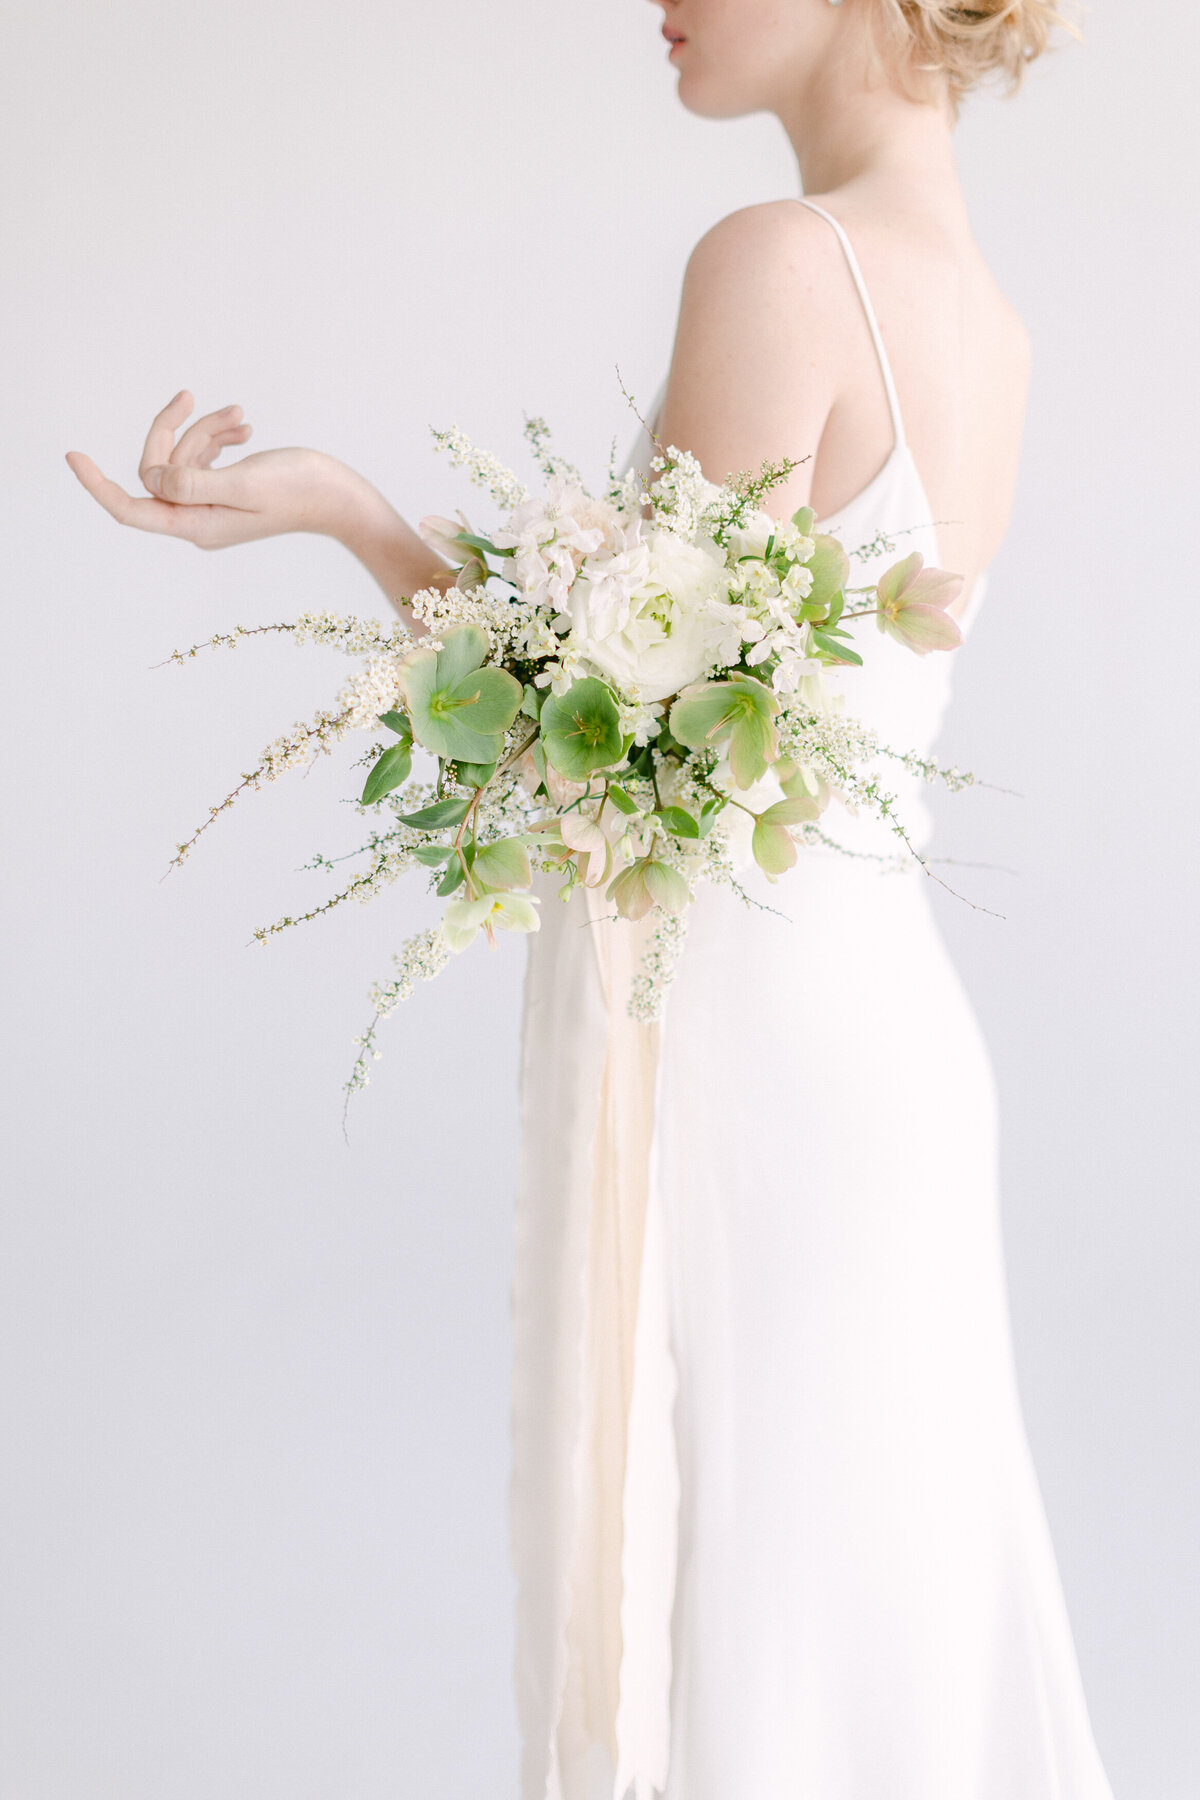 Atelier-Carmel-Wedding-Florist-GALLERY-Bridal-42